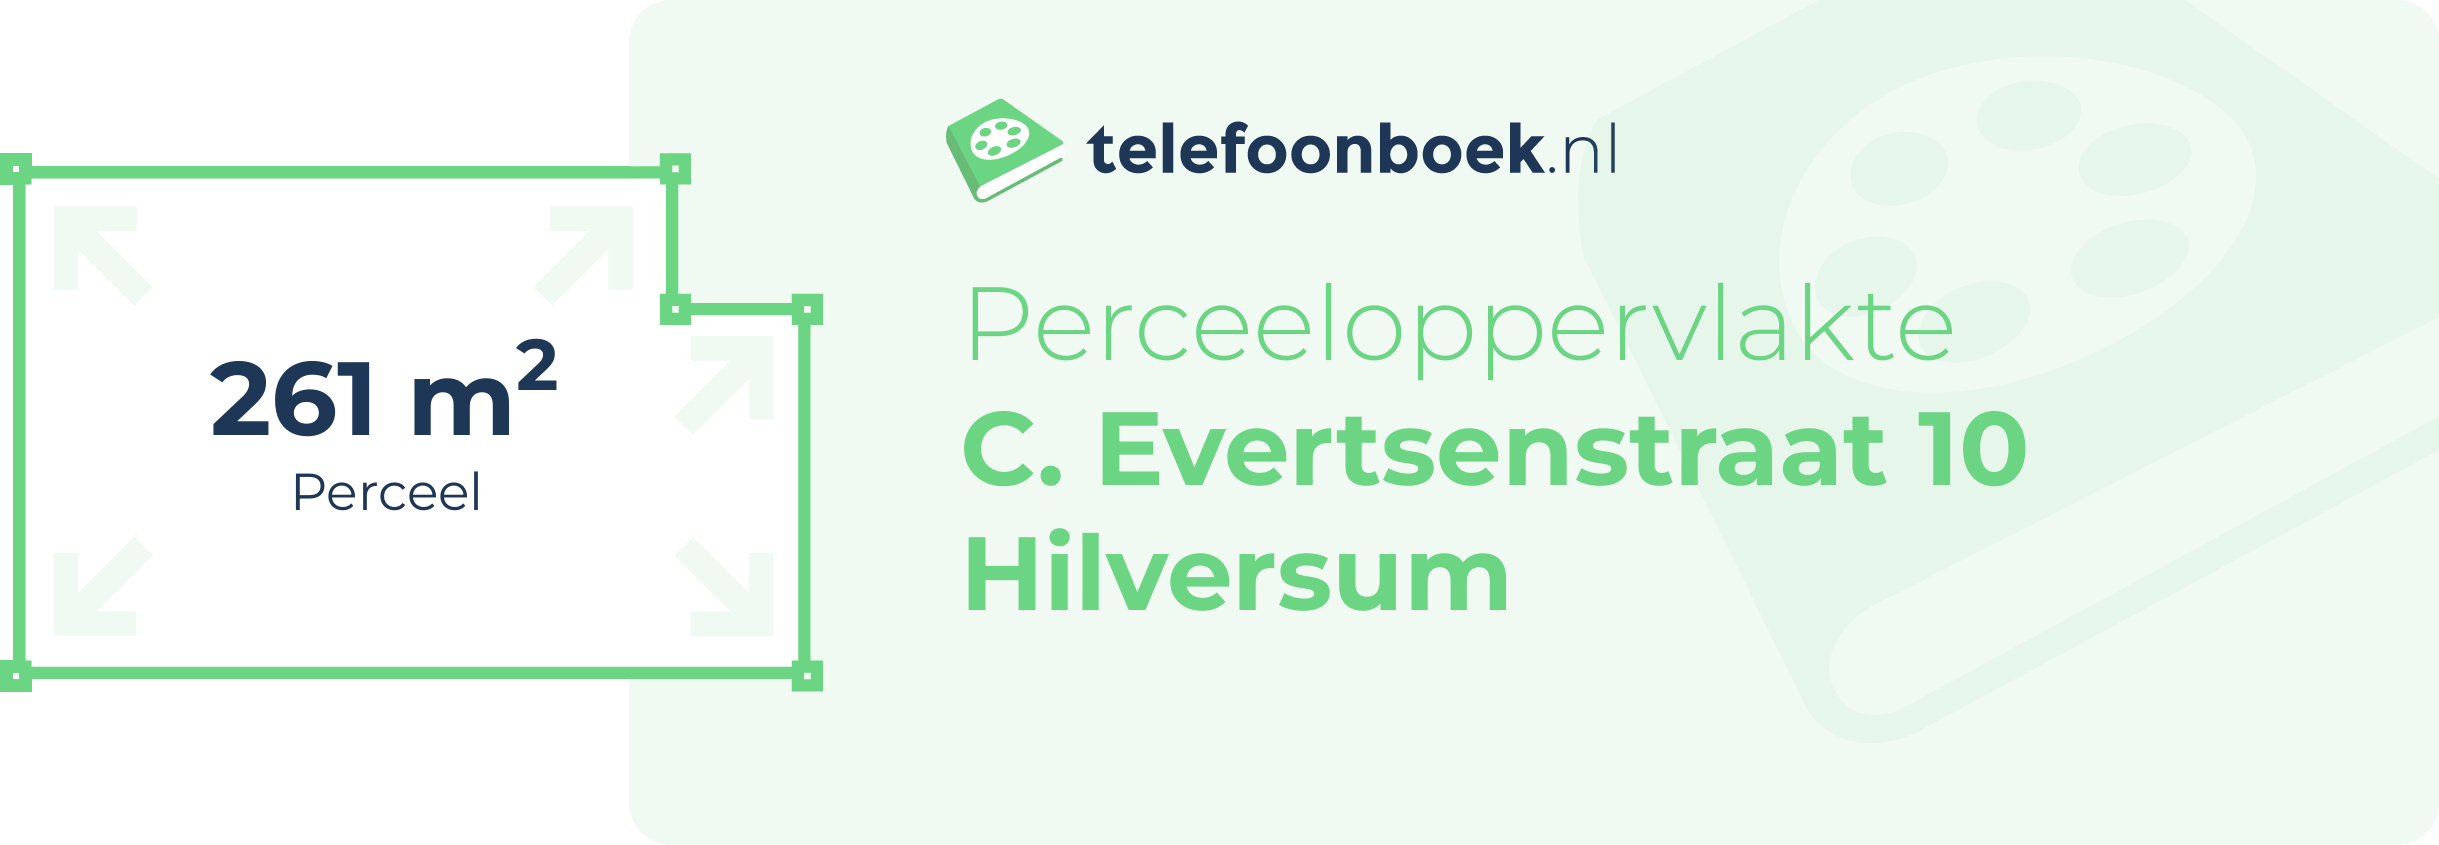 Perceeloppervlakte C. Evertsenstraat 10 Hilversum